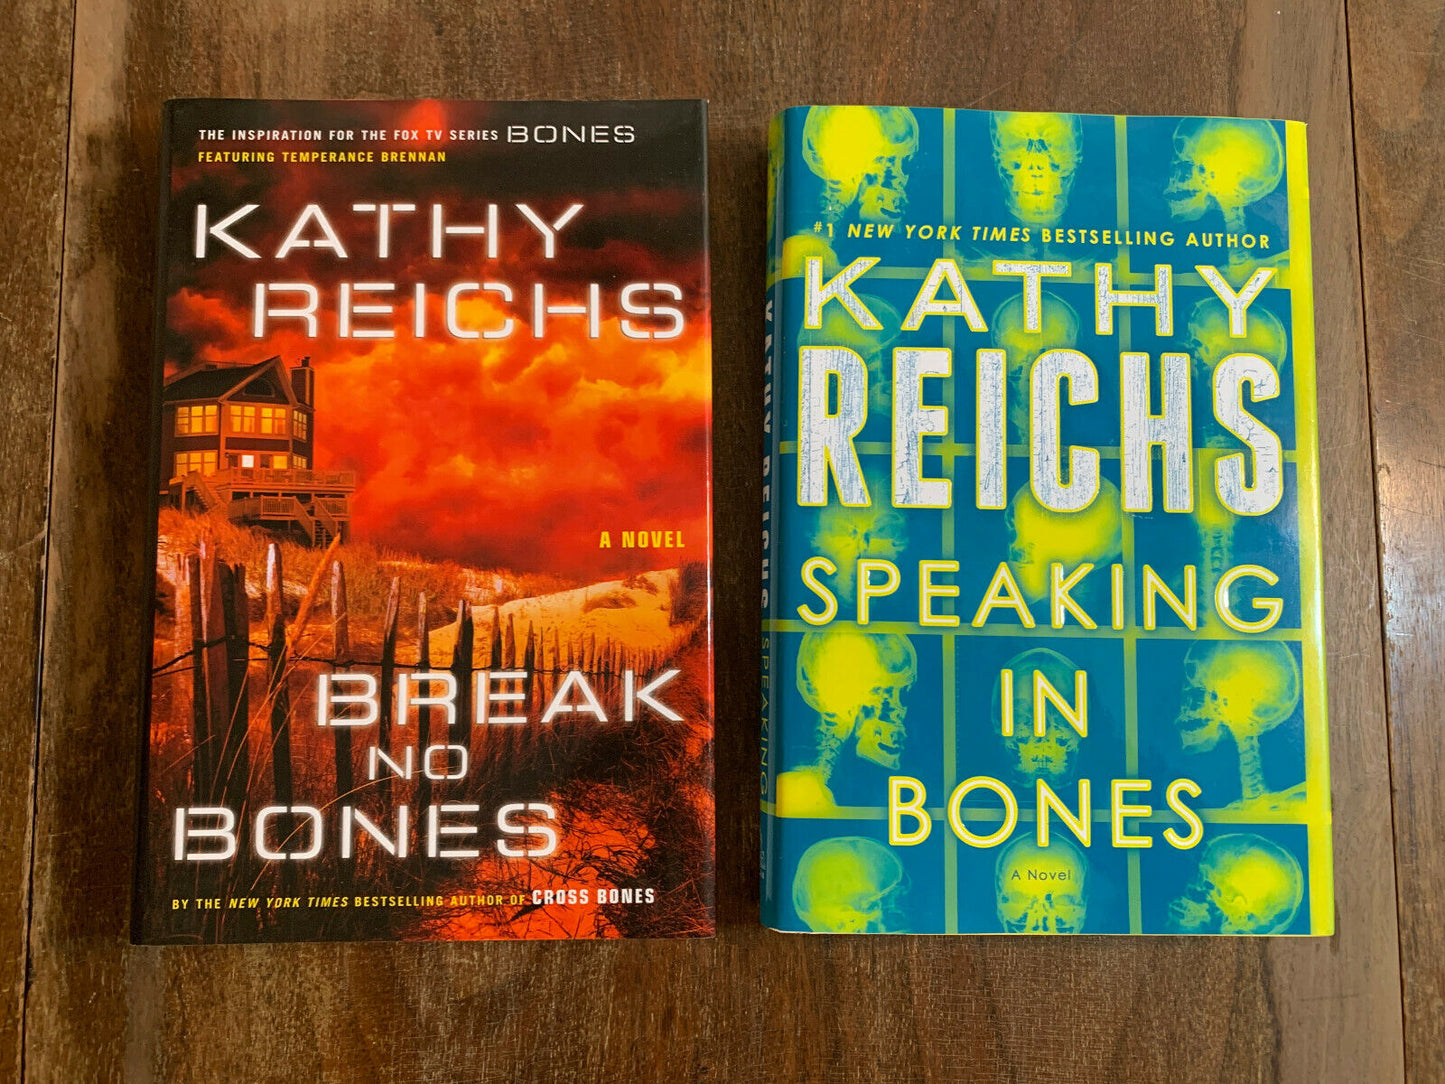 Kathy Reich's book lot - Temperance Brennan Bones novels - Break no Bones, more